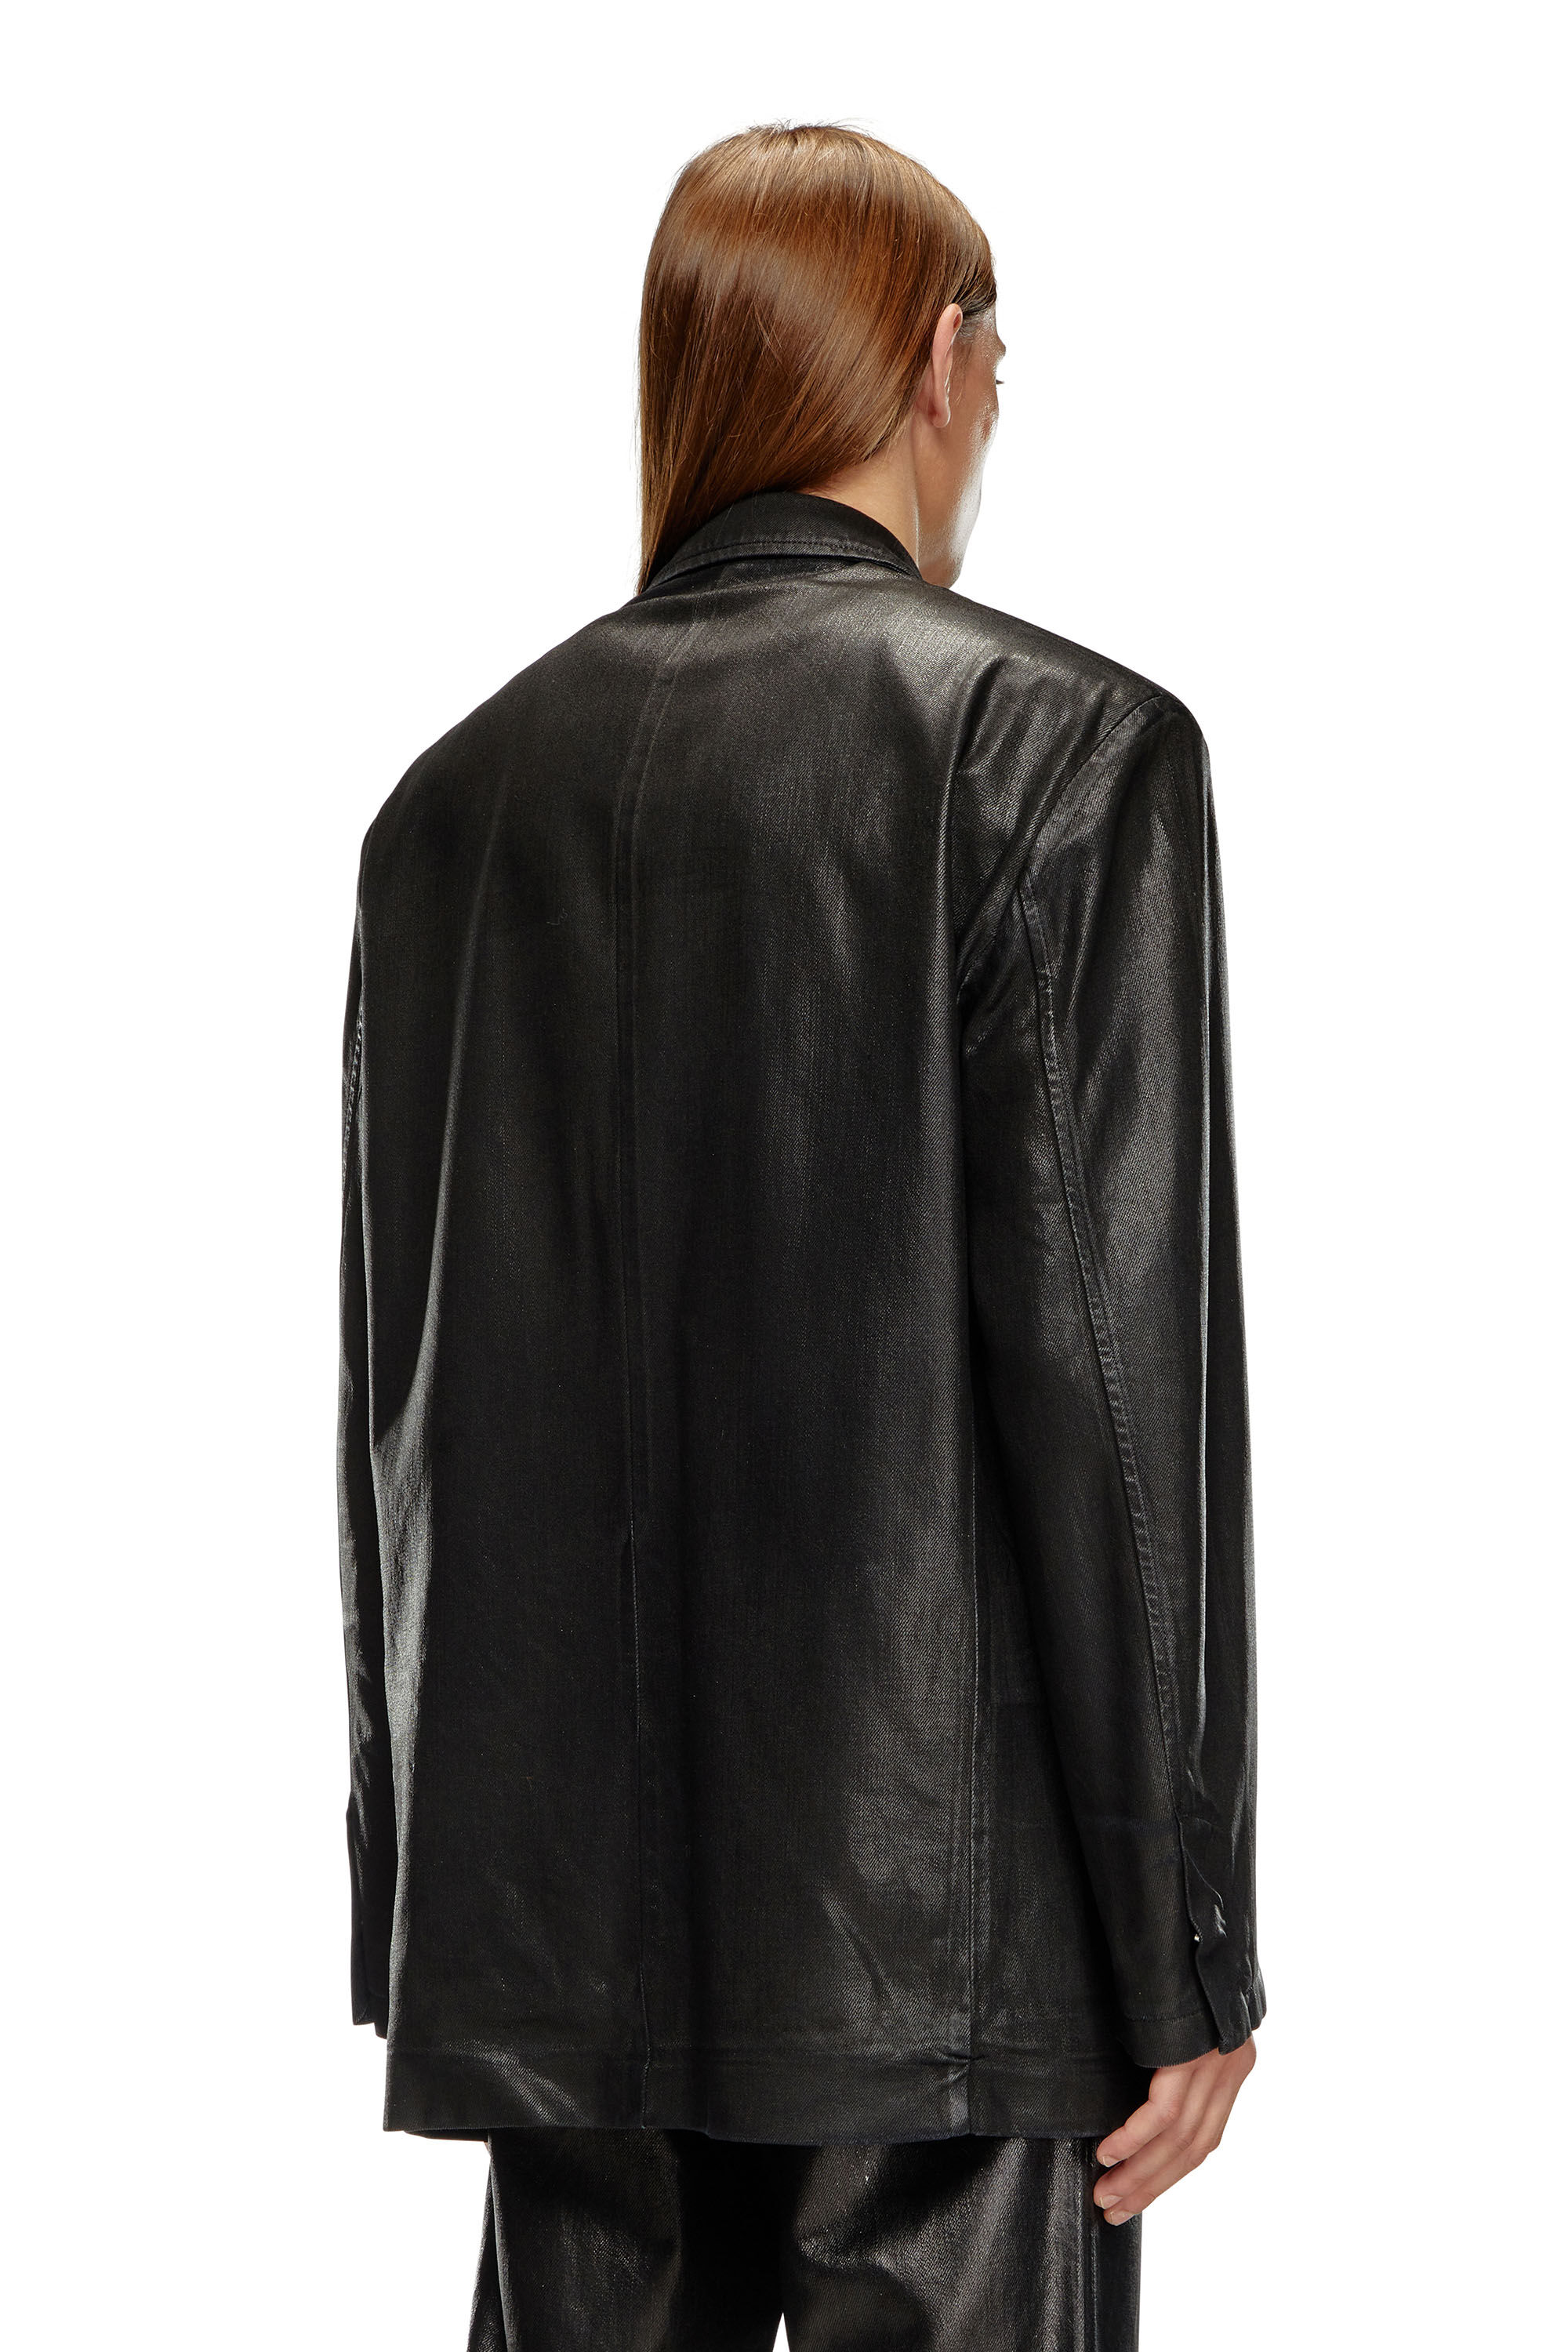 Diesel - D-BLA, Unisex Blazer in coated tailoring denim in Black - Image 4